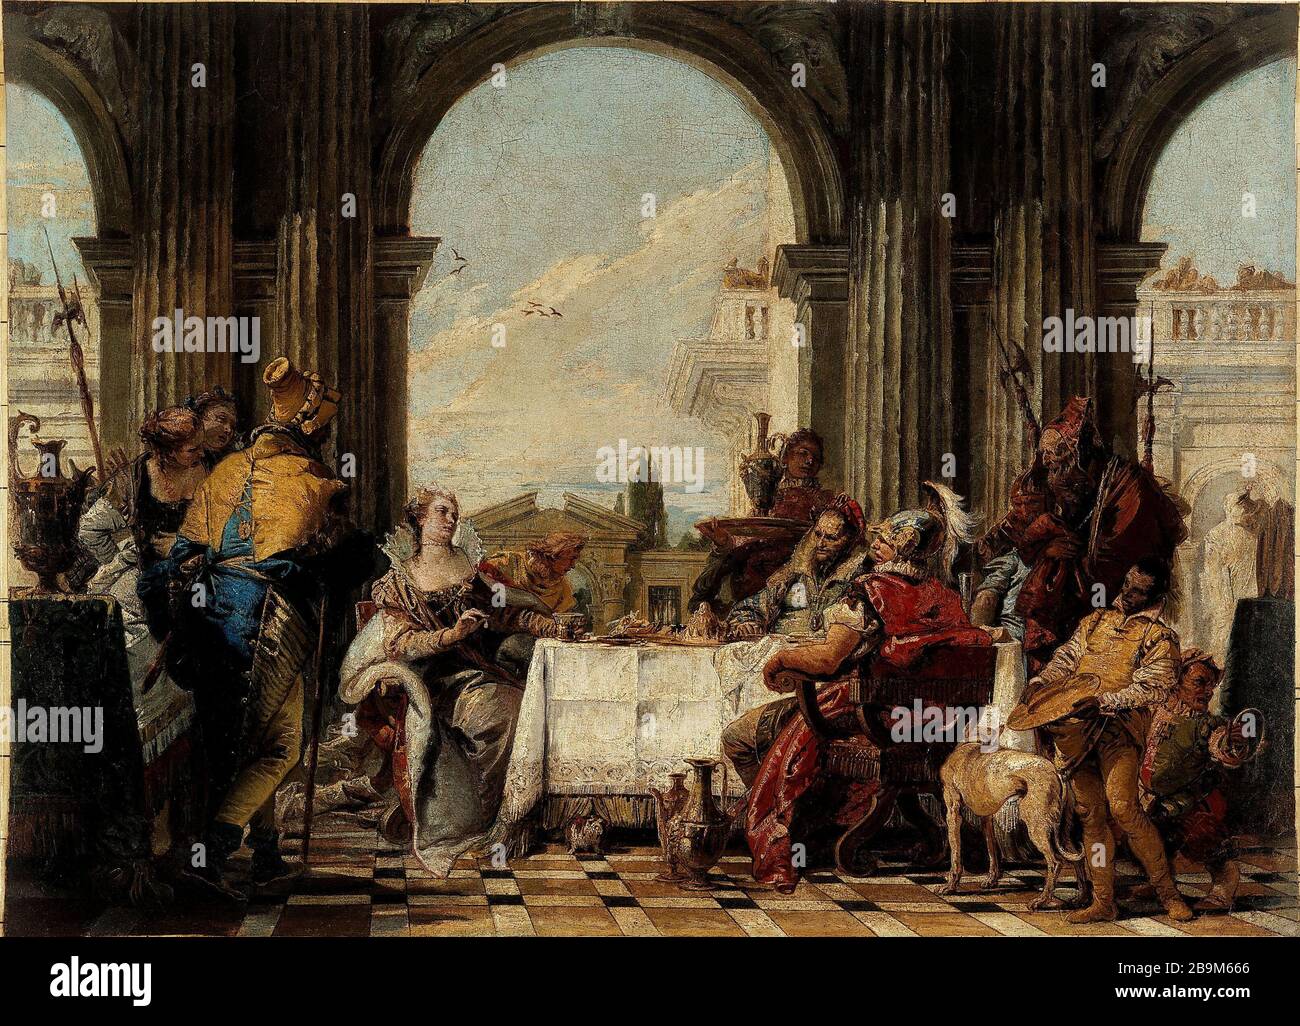 IL BANCHETTO DI CLEOPATRA Giambattista Tiepolo (1696-1770). "Le Banquet de Cléopatre, entre 1742 et 1743". Huile sur toile. Parigi, museo Cognacq-Jay. Foto Stock